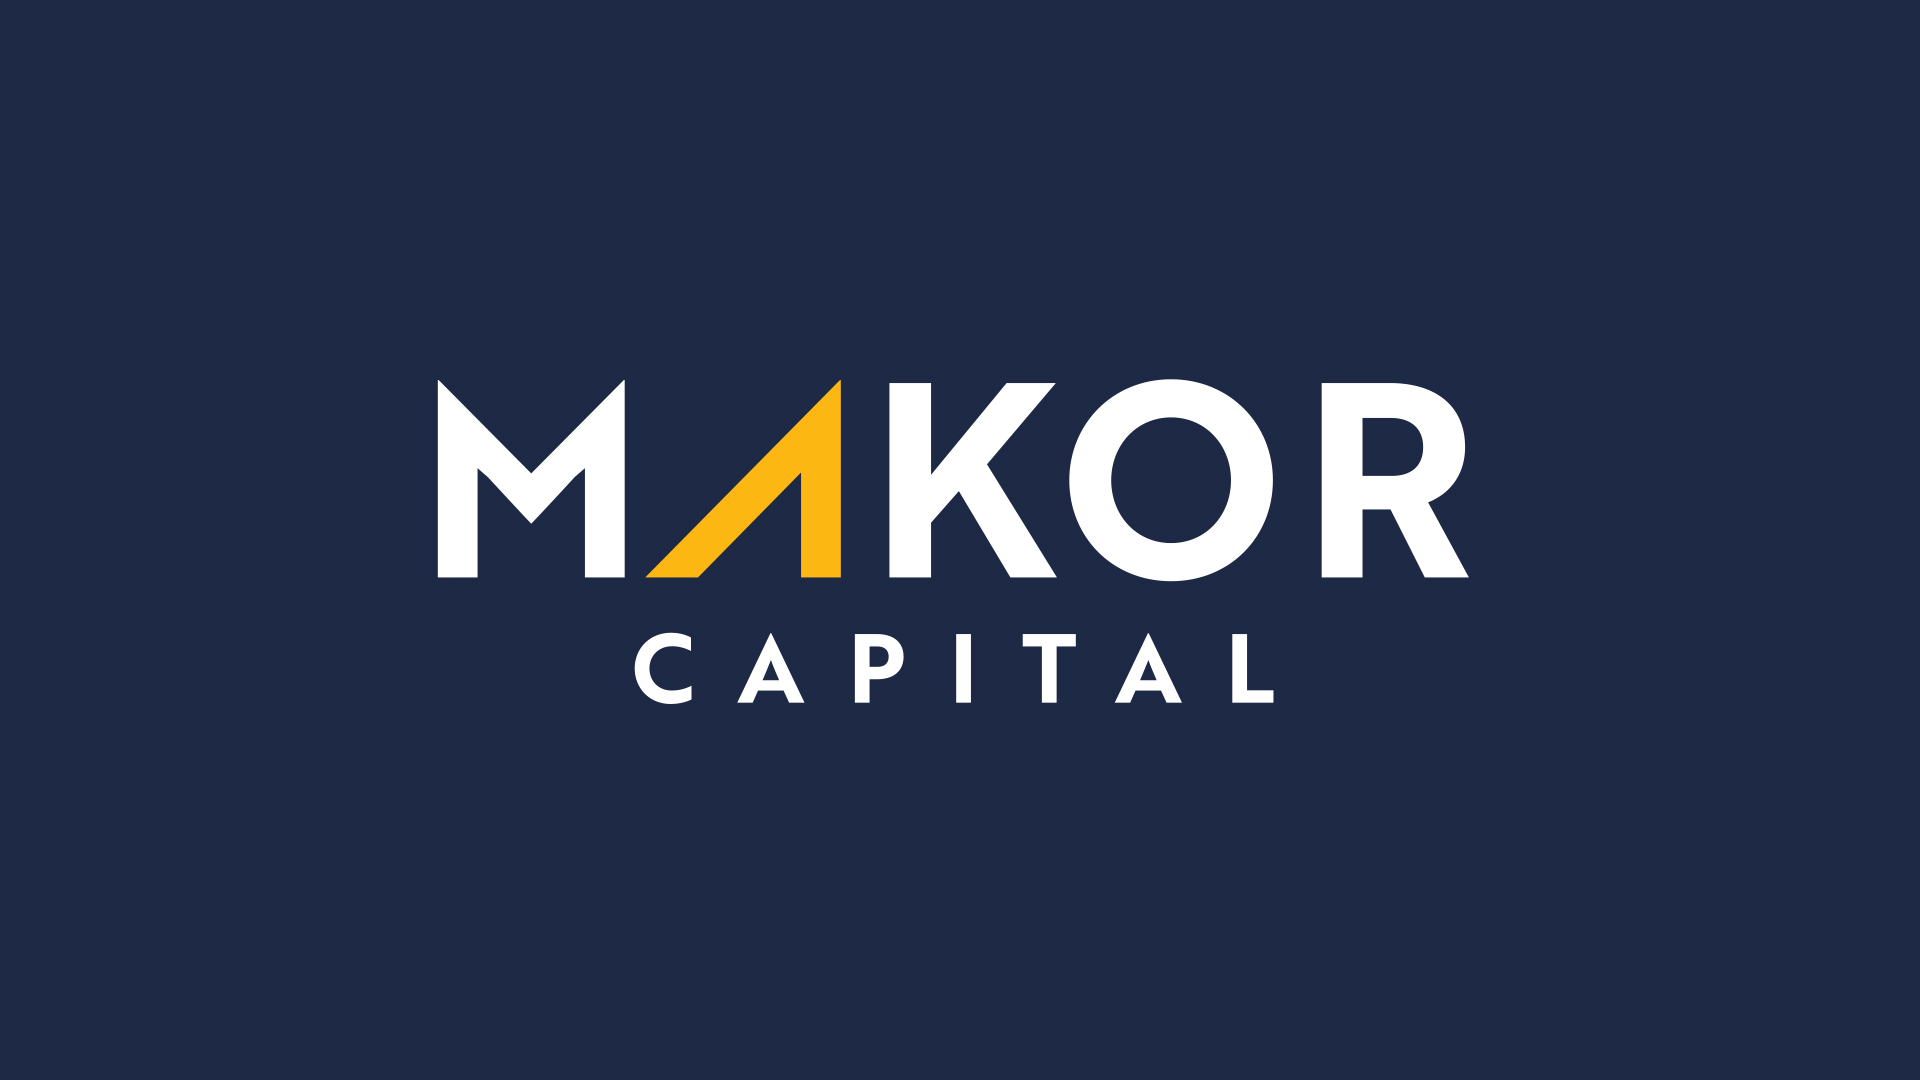 makor capital logo on blue